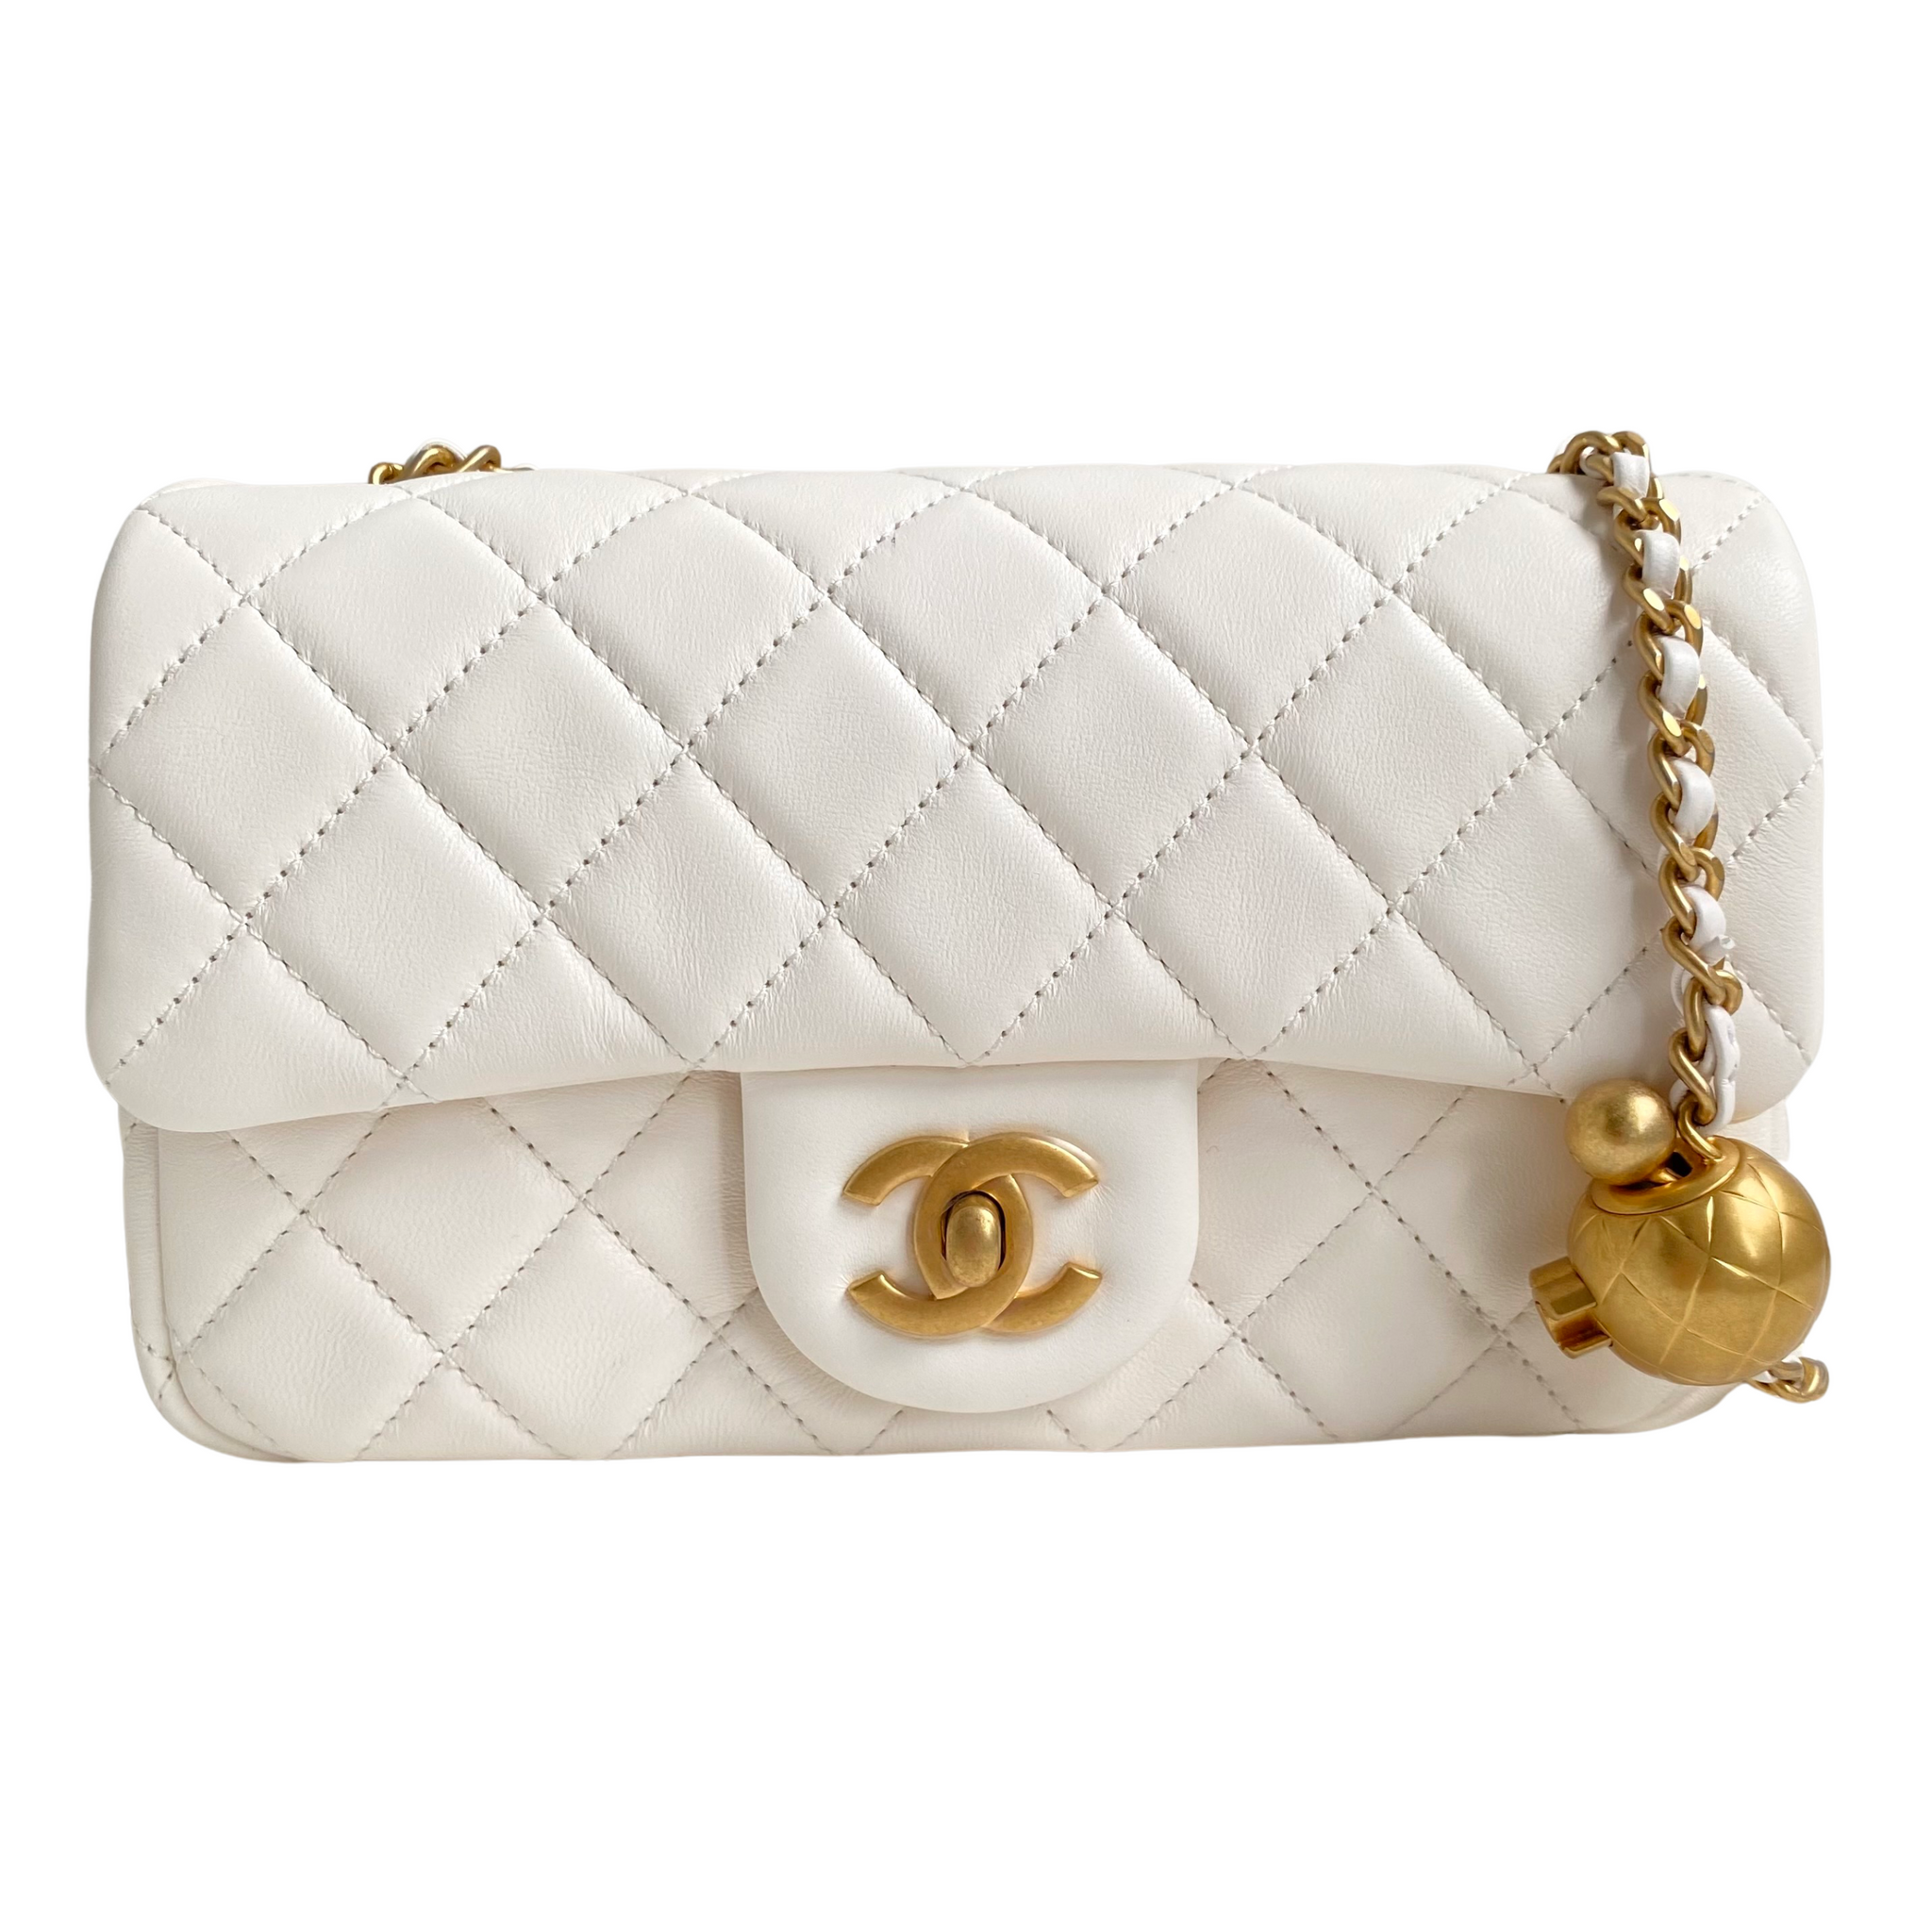 Luxury Fashion Rentals  Rent Chanel Handbags  Rent Luxury Bags